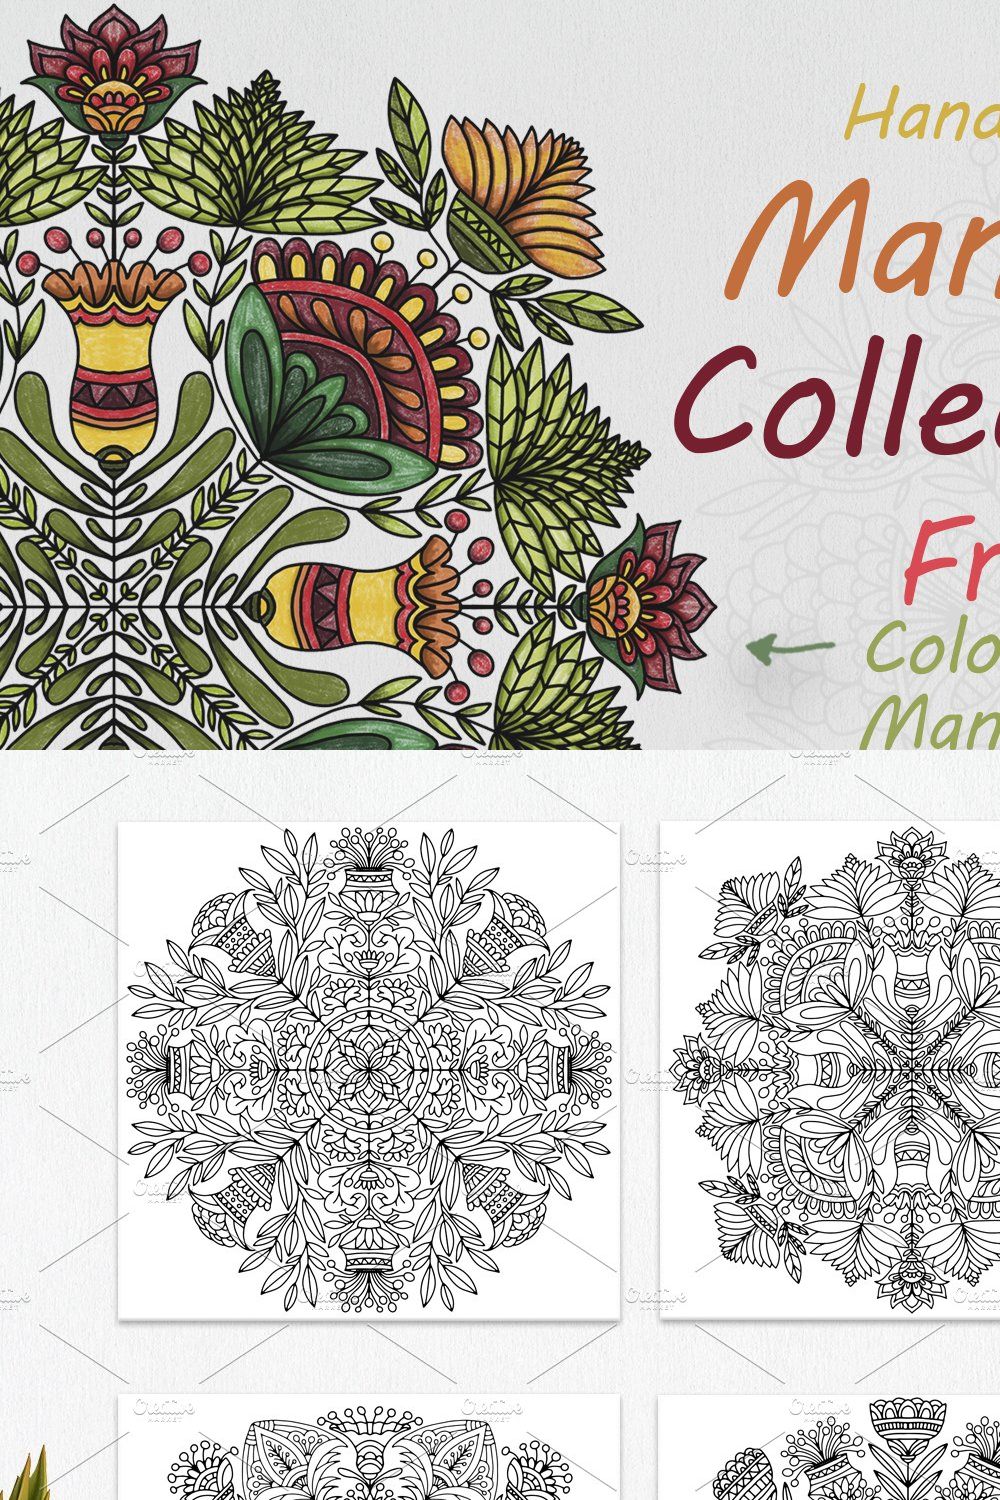 Drawn mandalas in folk style flower pinterest preview image.